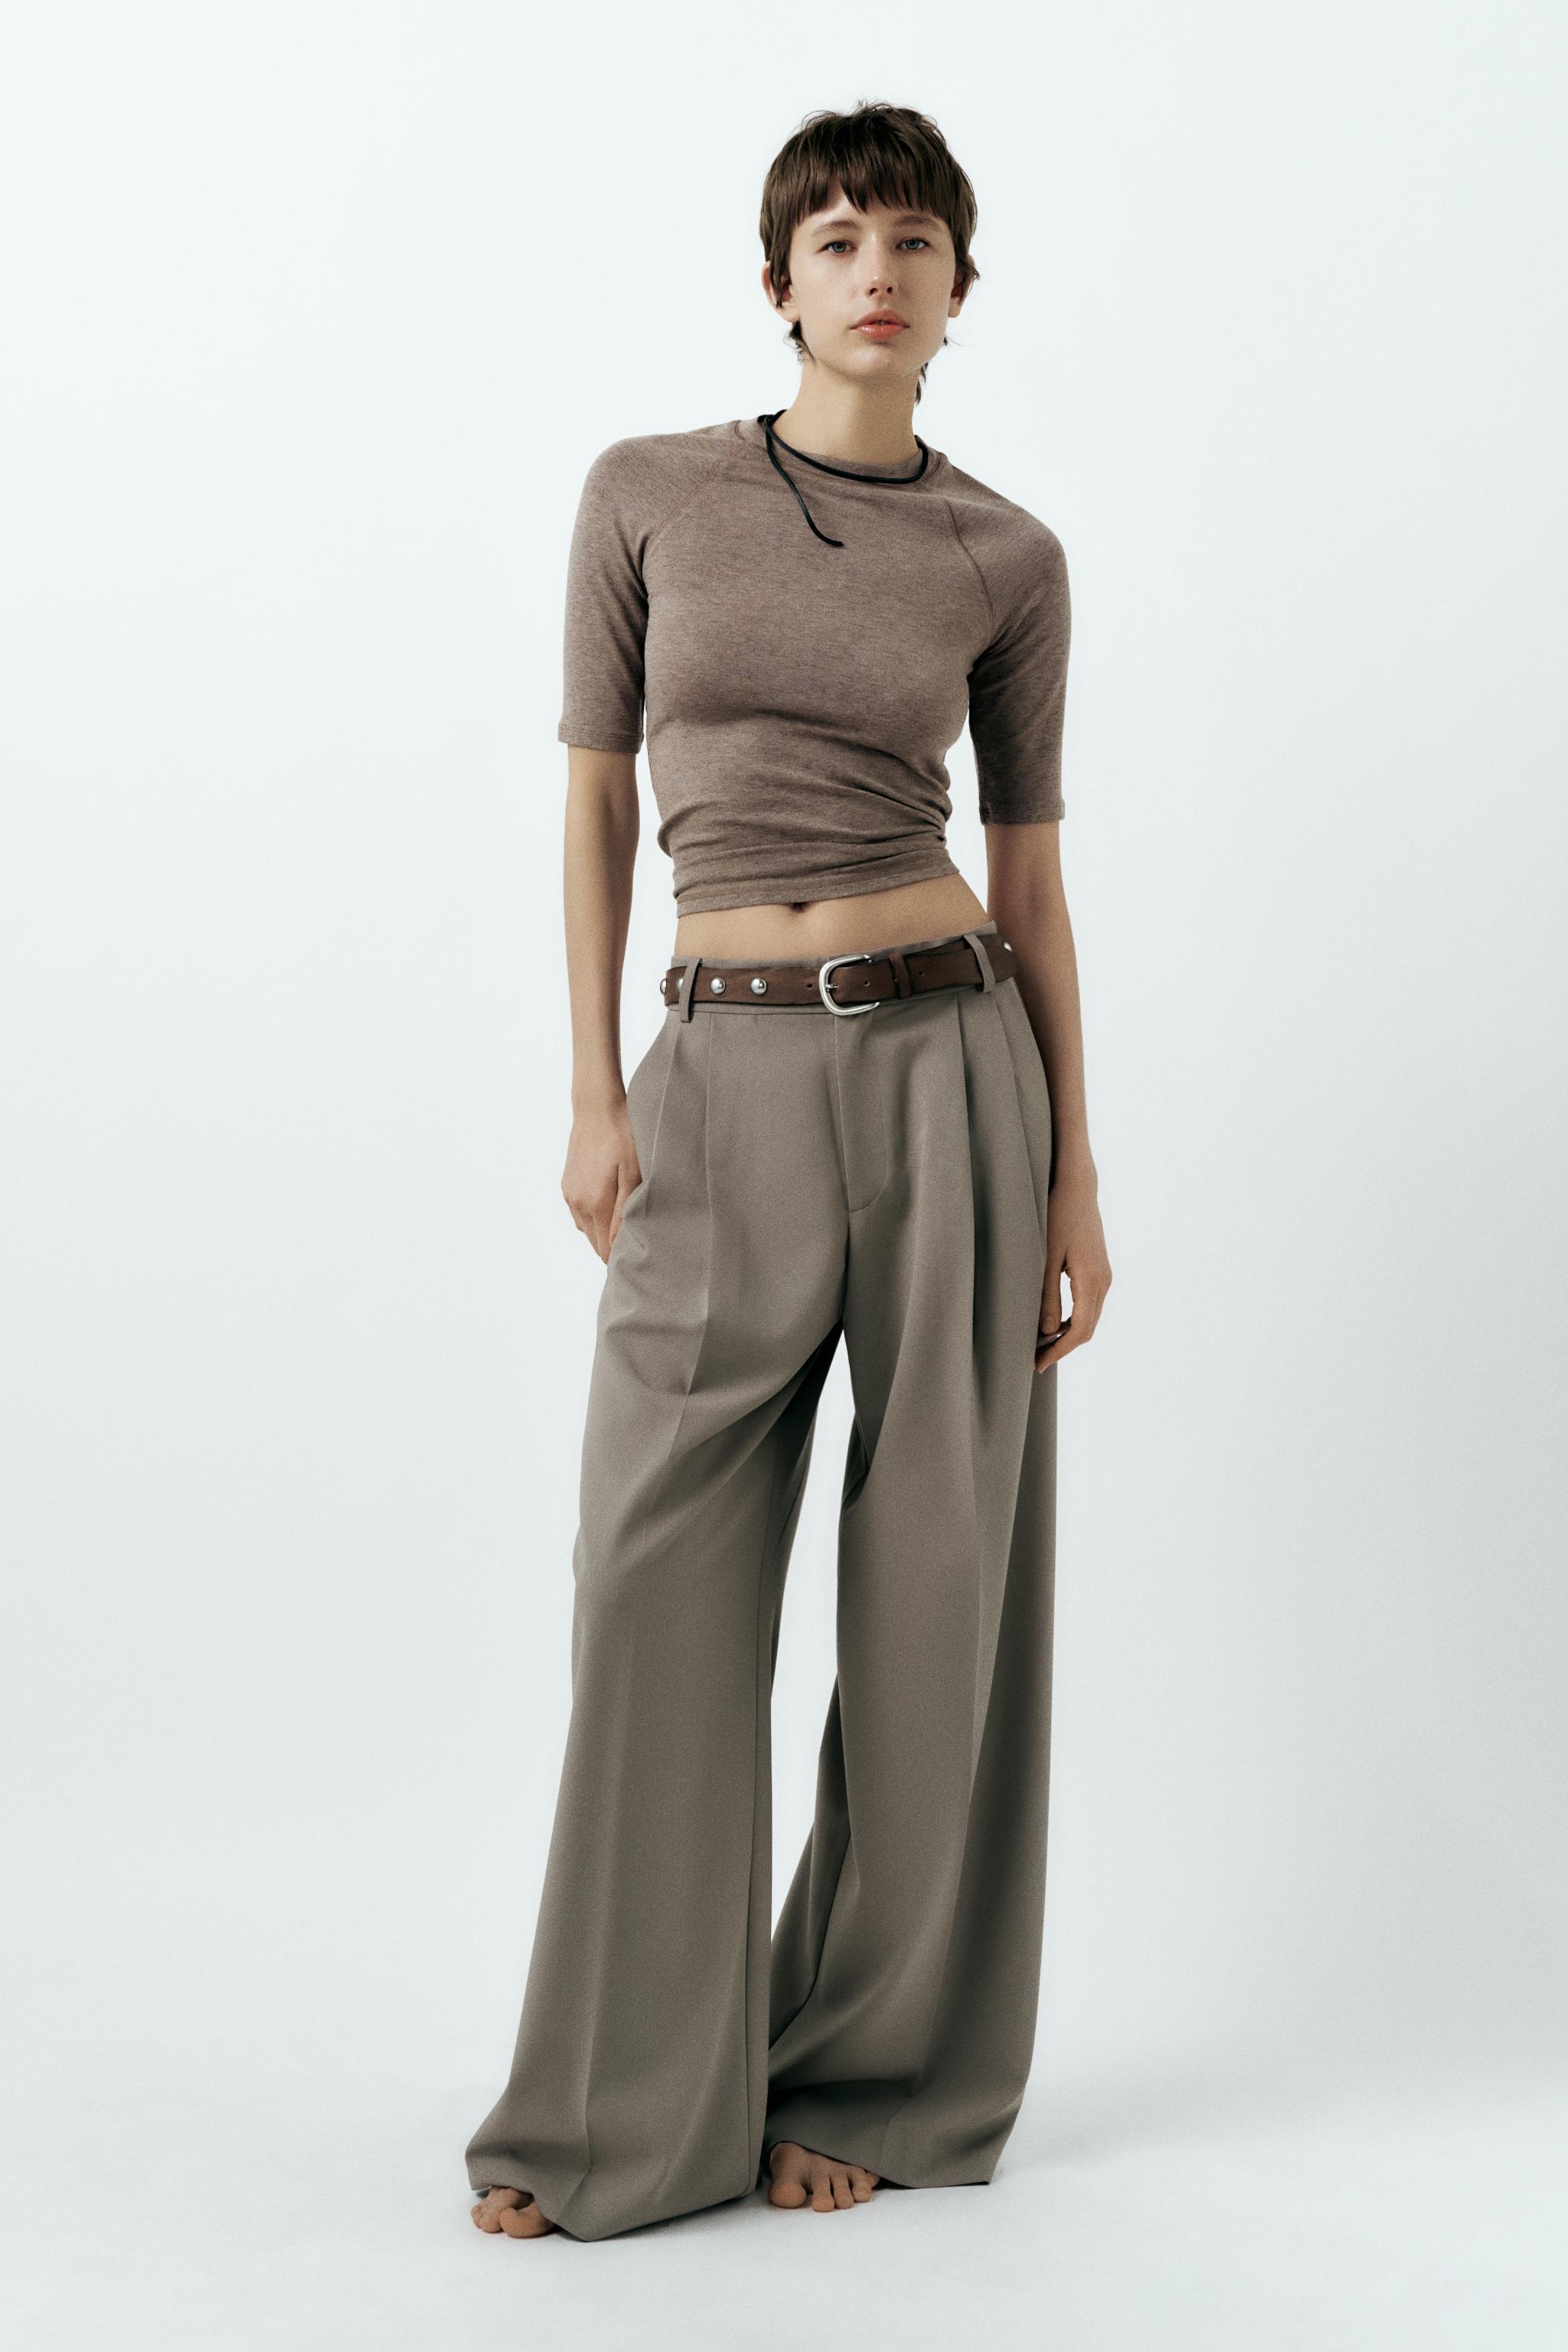 ZARA Authentic Highwaist Trousers (PREORDER), Women's Fashion